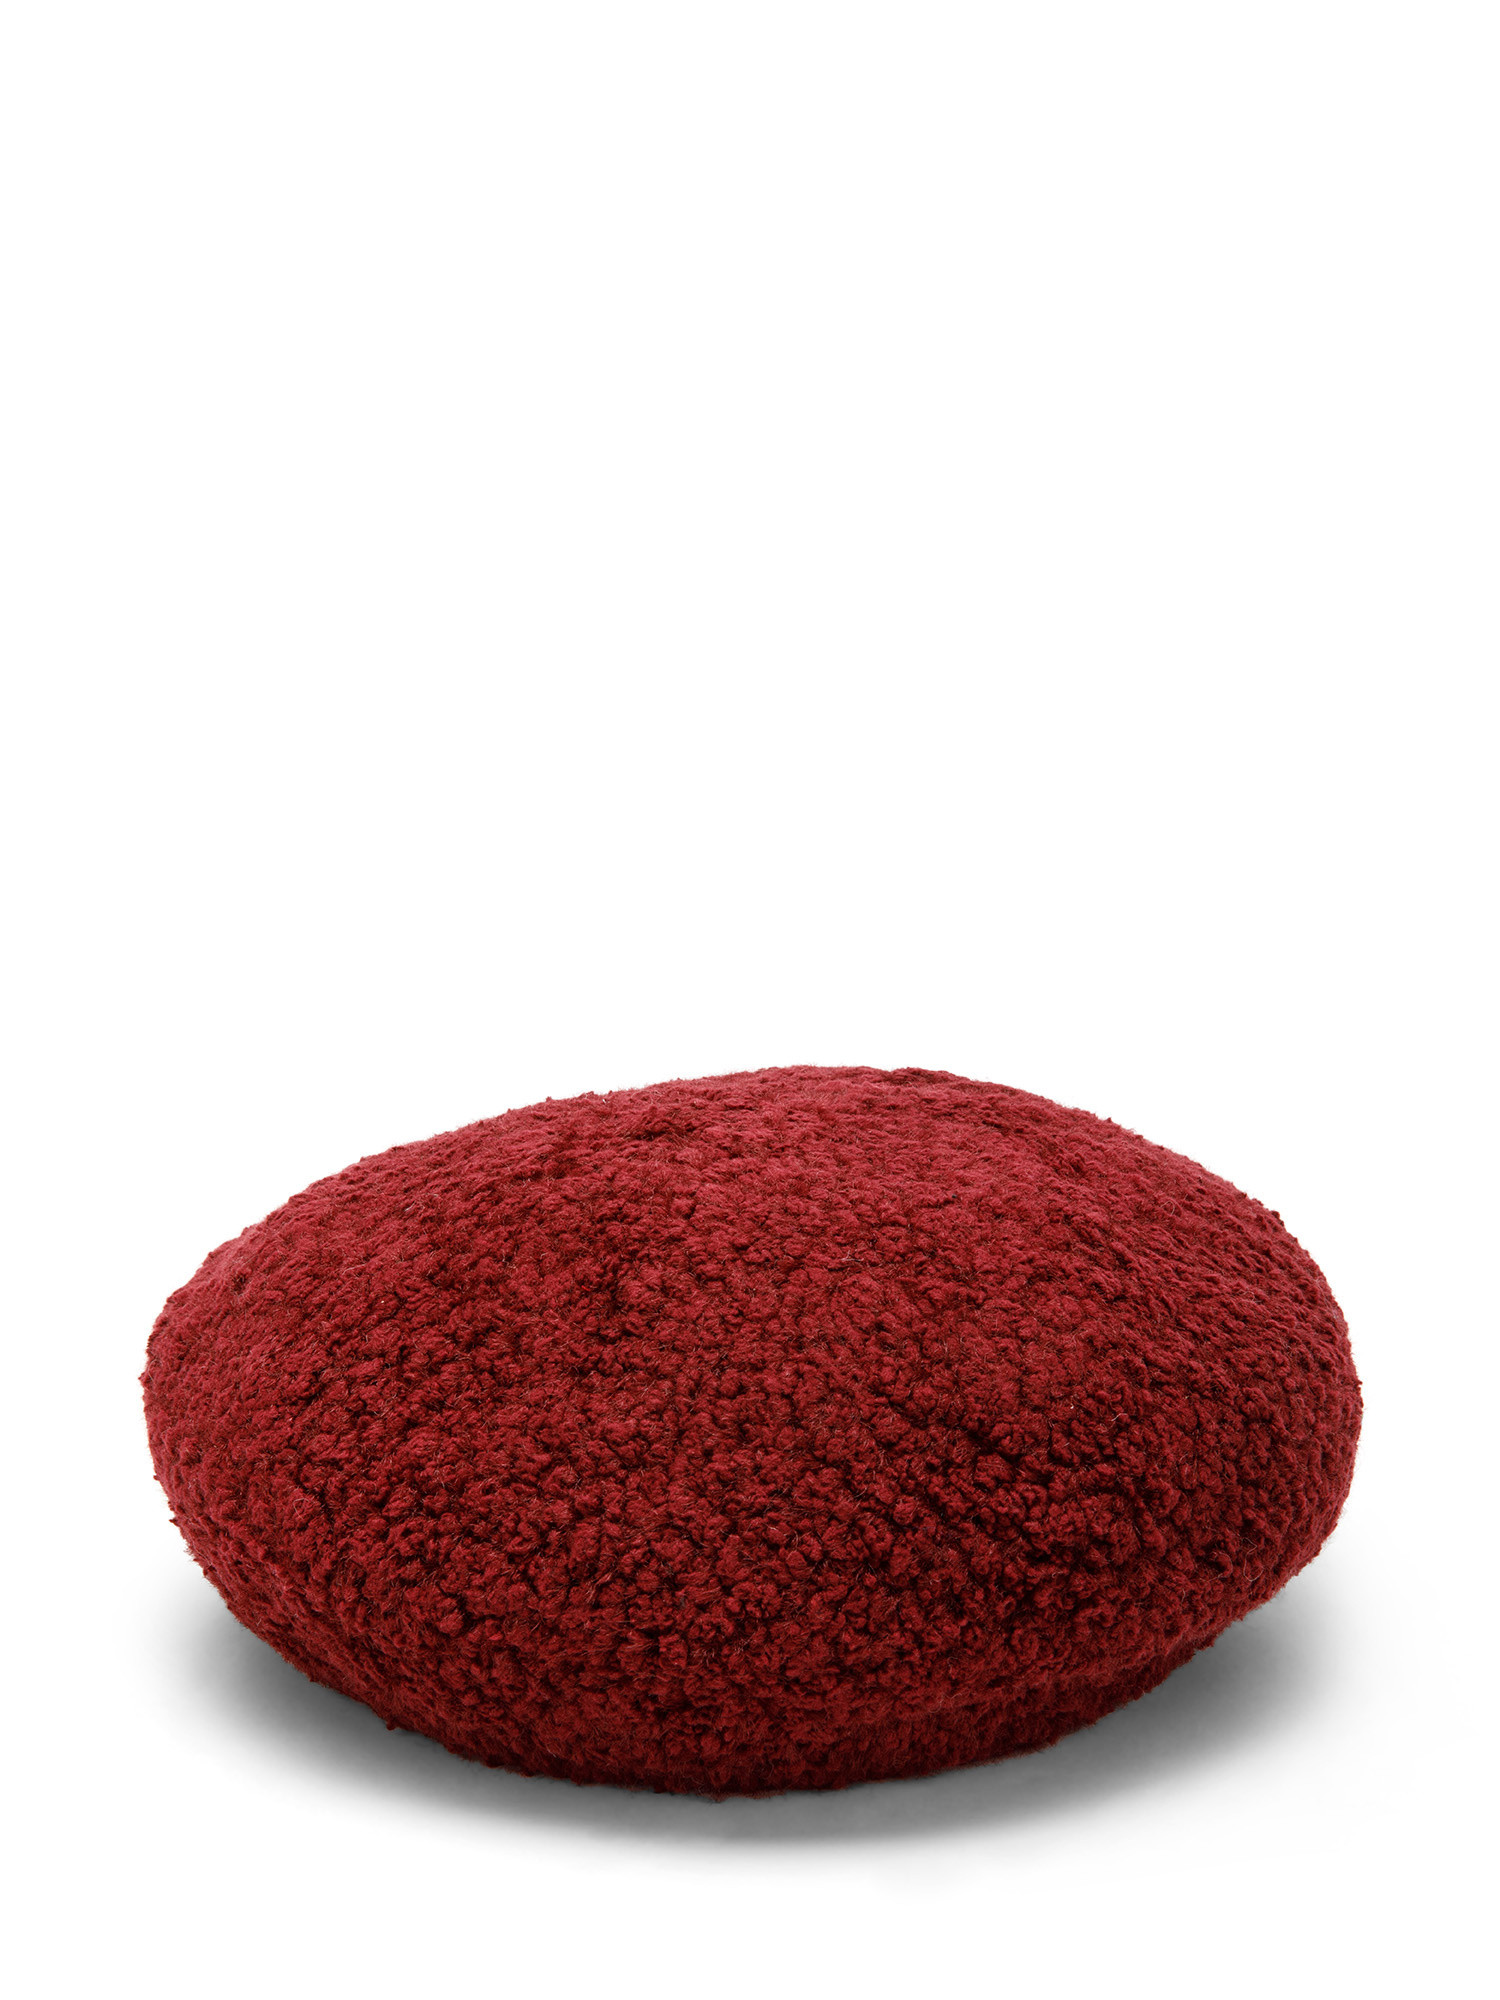 Koan - Fur effect beret, Dark Red, large image number 0